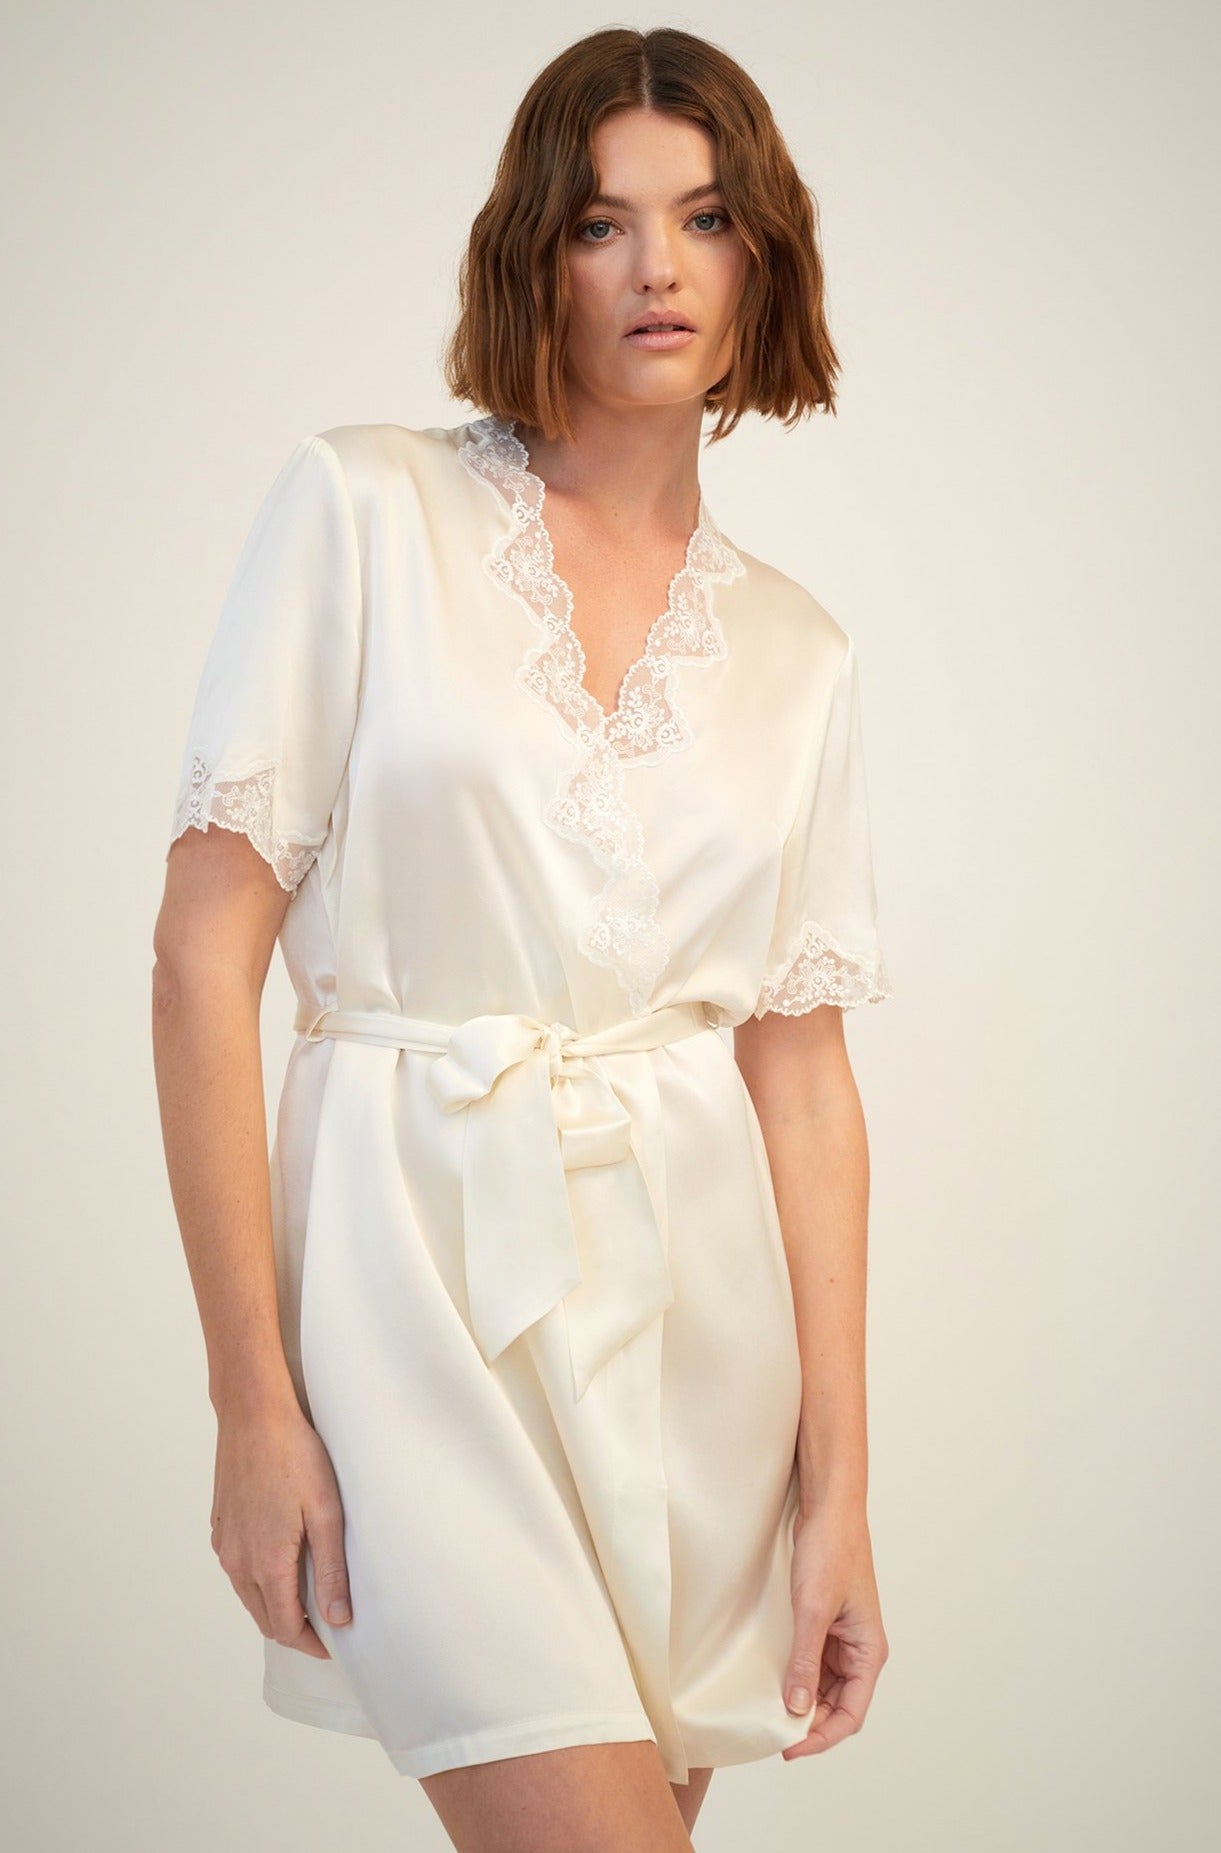 Silk Satin Kimono Robe For Women Perfect For Weddings, Satin Sleepwear, And  Lingerie From Nbkingstar, $14.68 | DHgate.Com